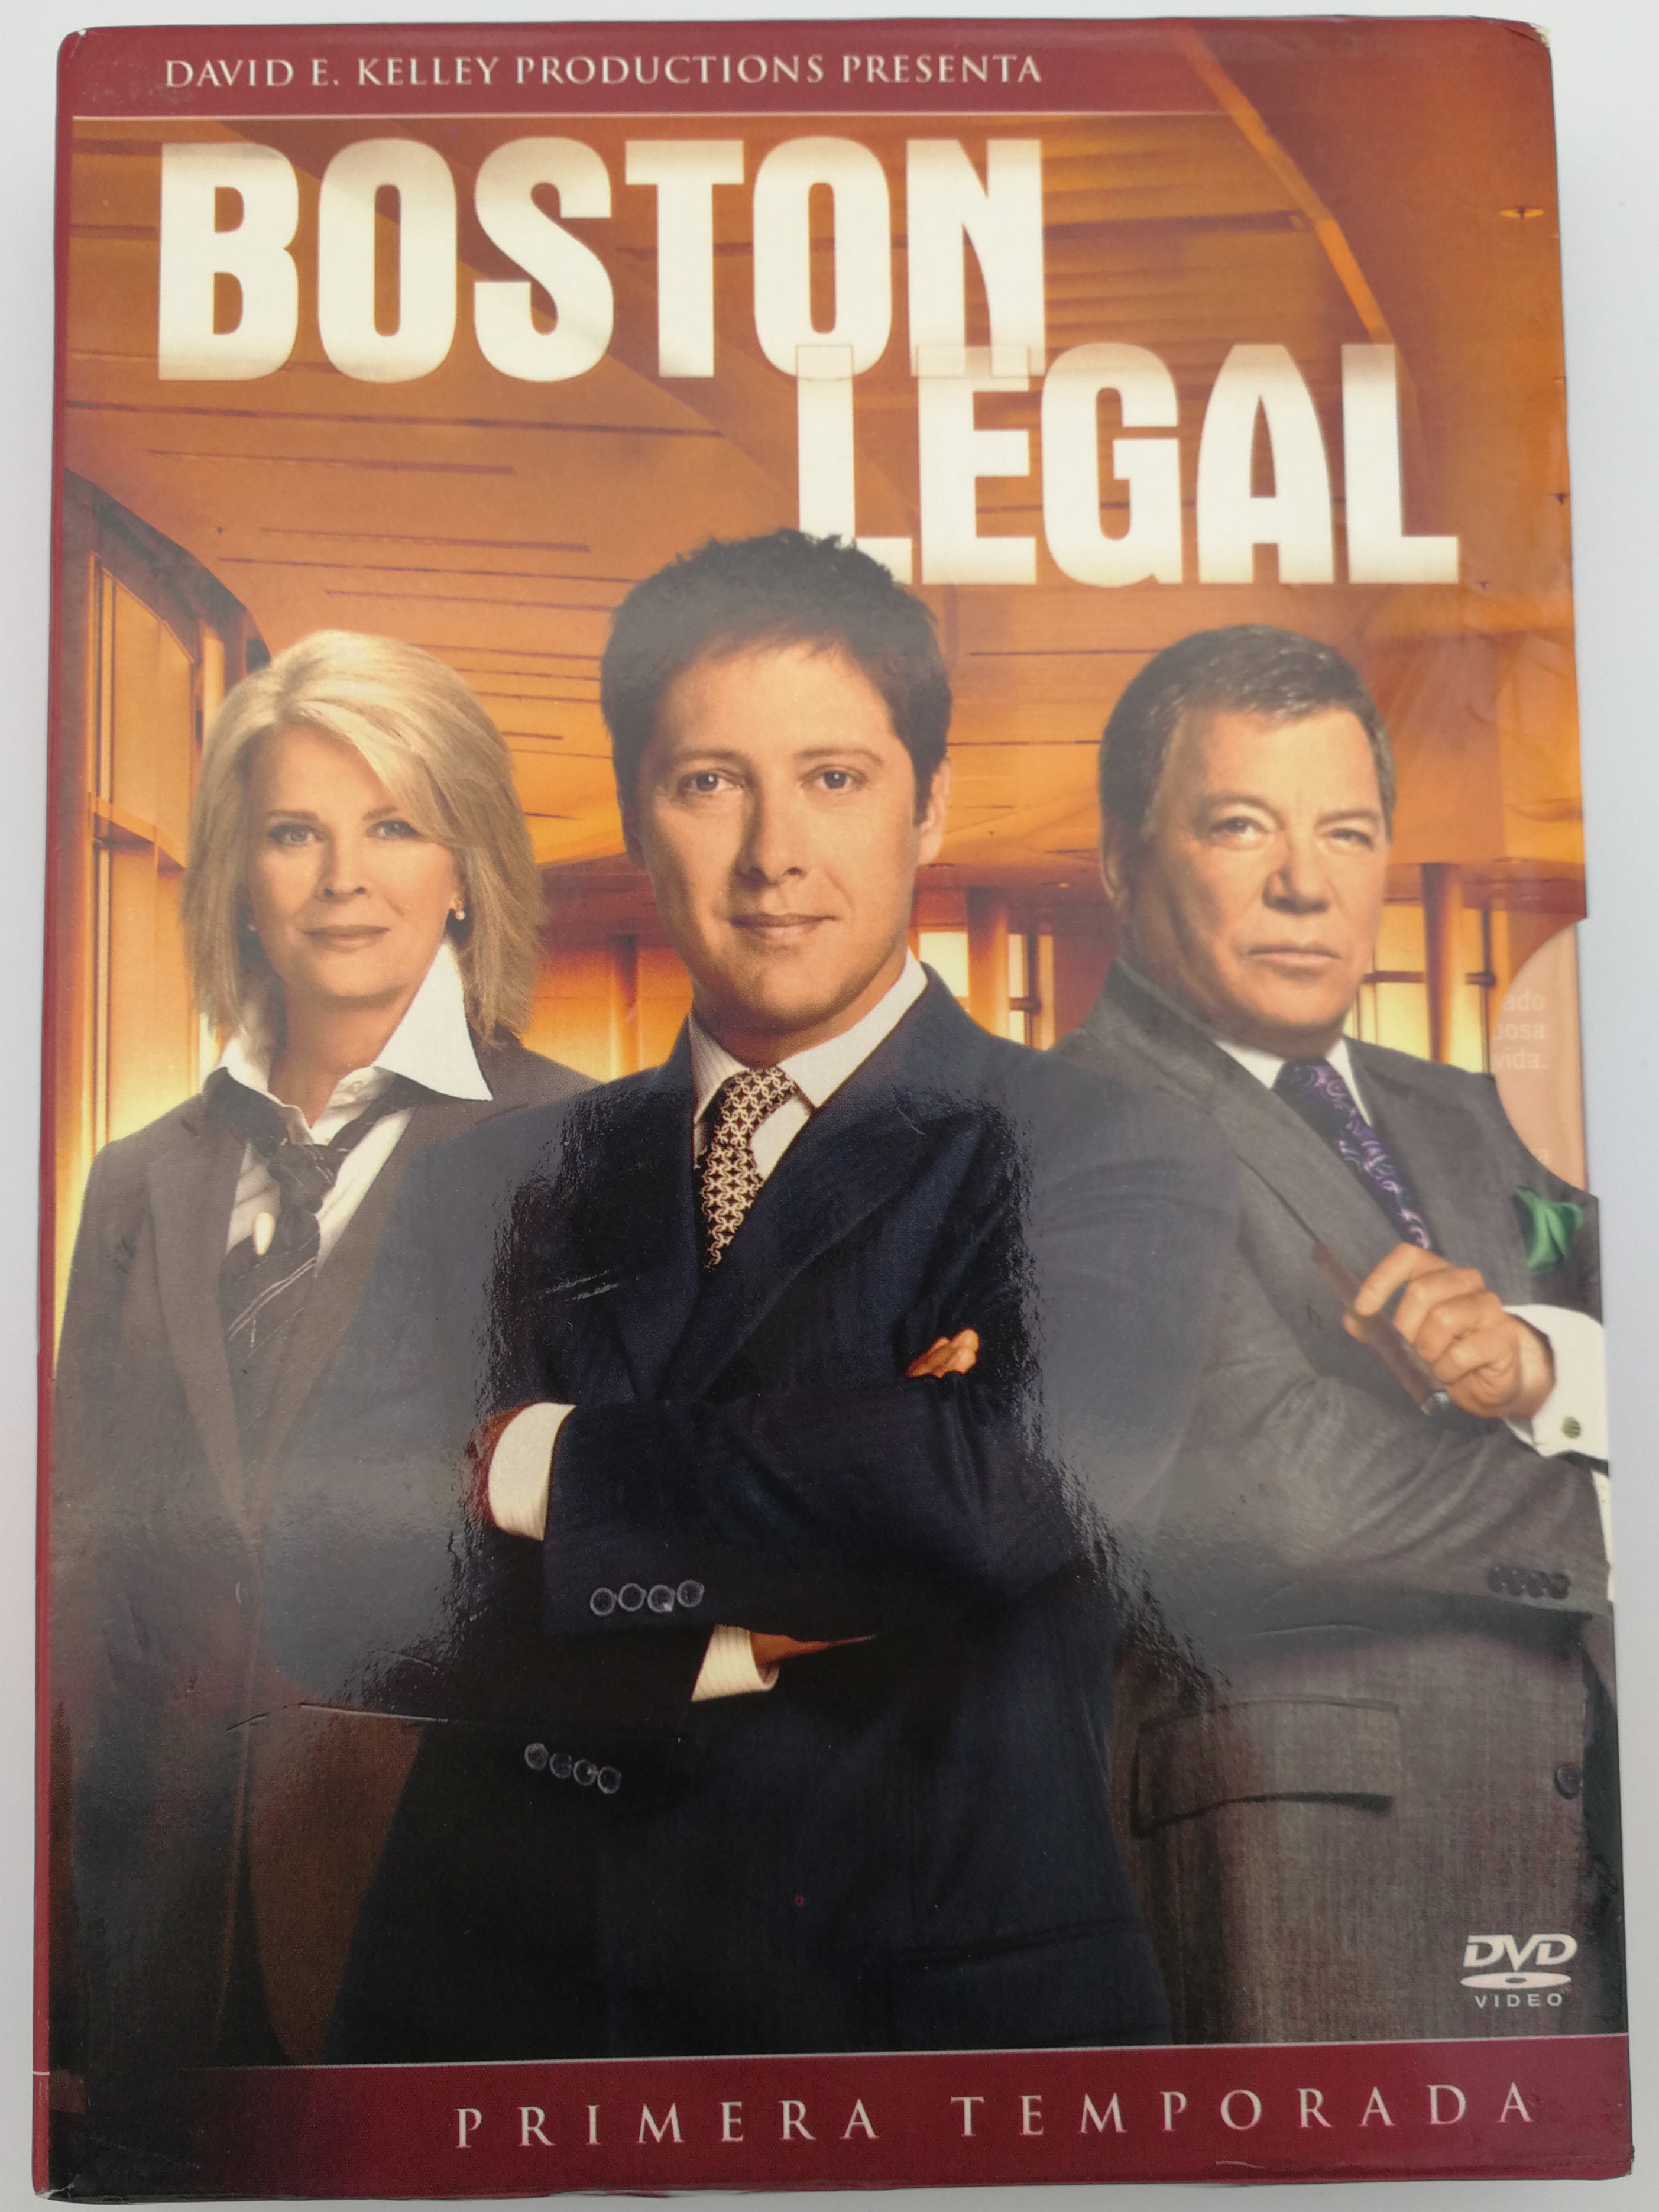 Boston Legal DVD BOX 2004 5DVD First Season - Primera Temporada / Created  by David E. Kelley / Starring: James Spader, William Shatner, Candice  Bergen, Monica Potter - bibleinmylanguage